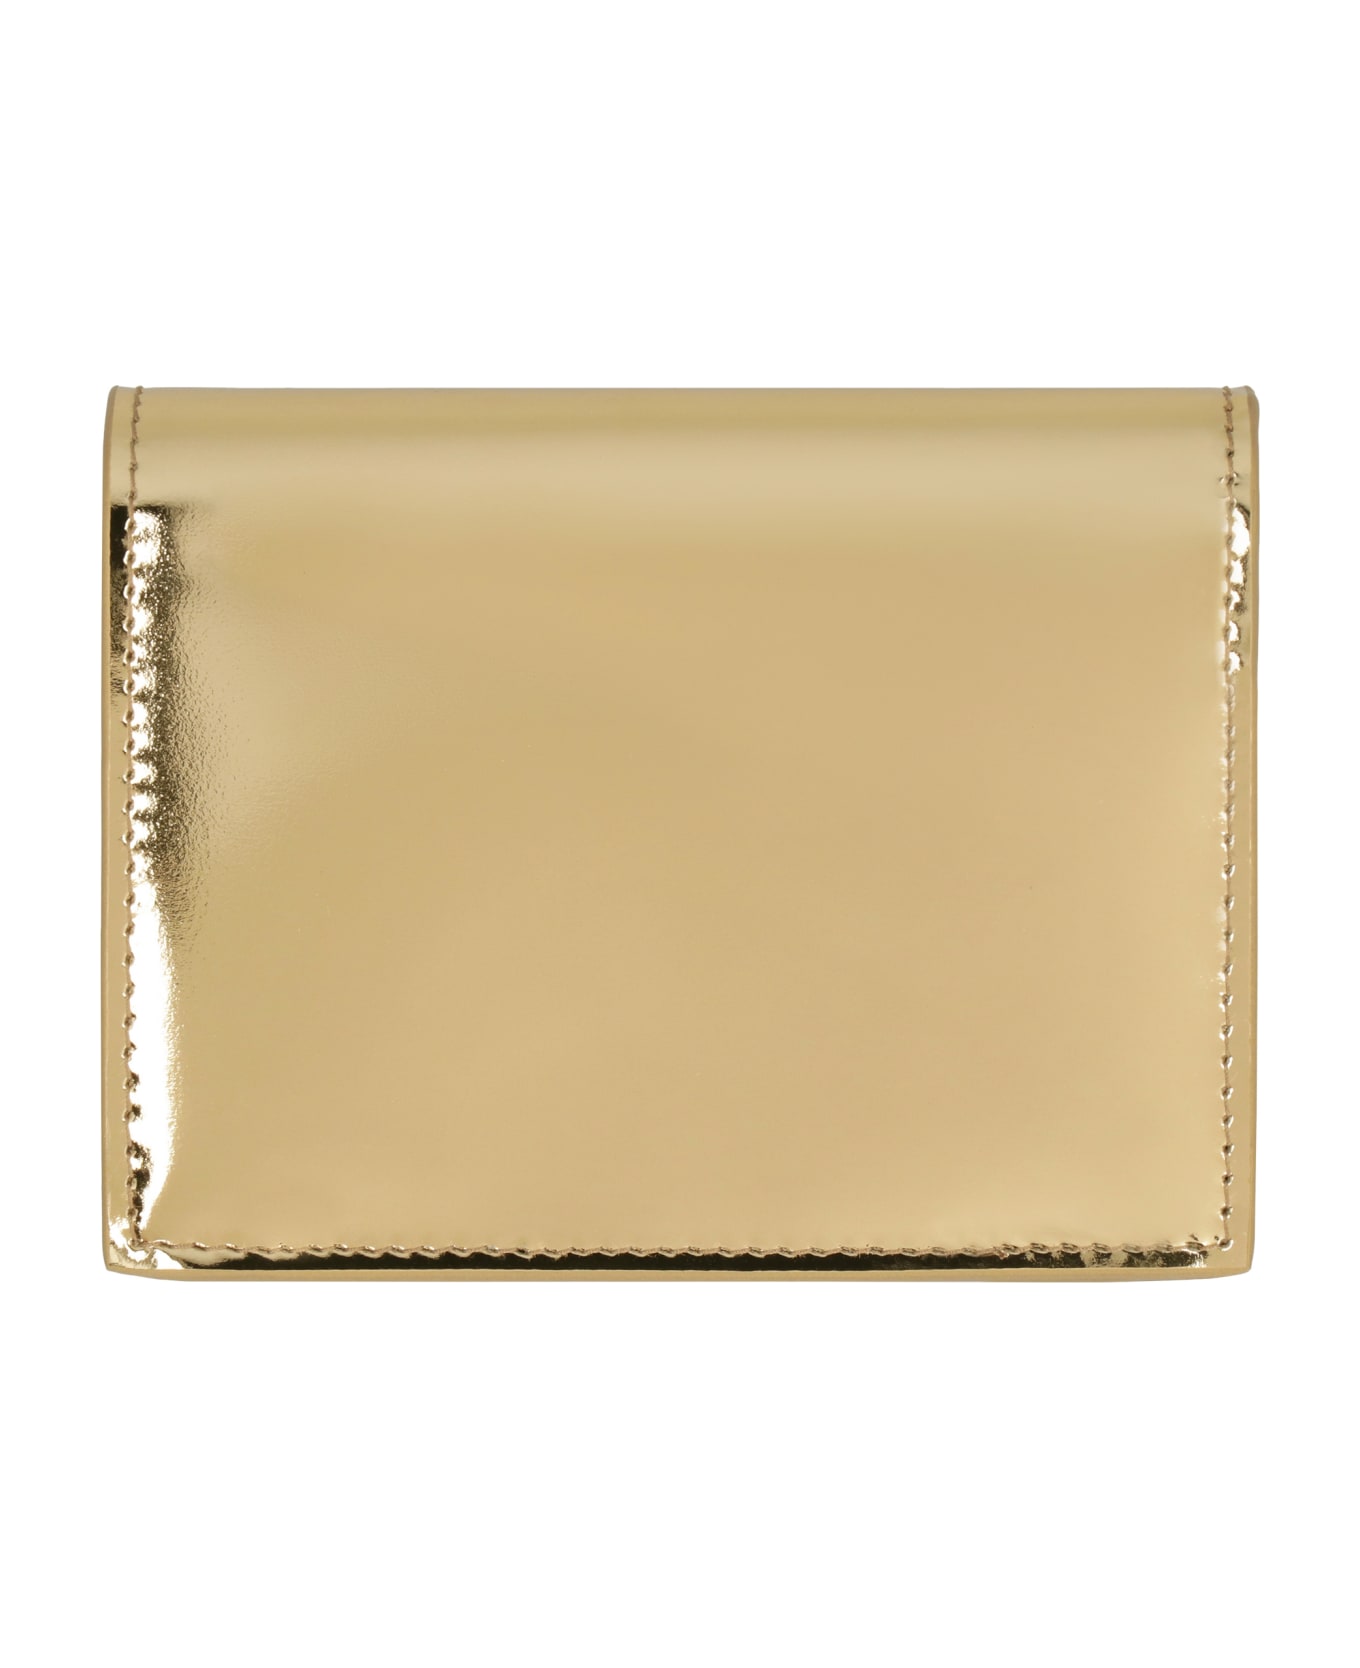 Prada Metallic Leather Wallet - Gold 財布